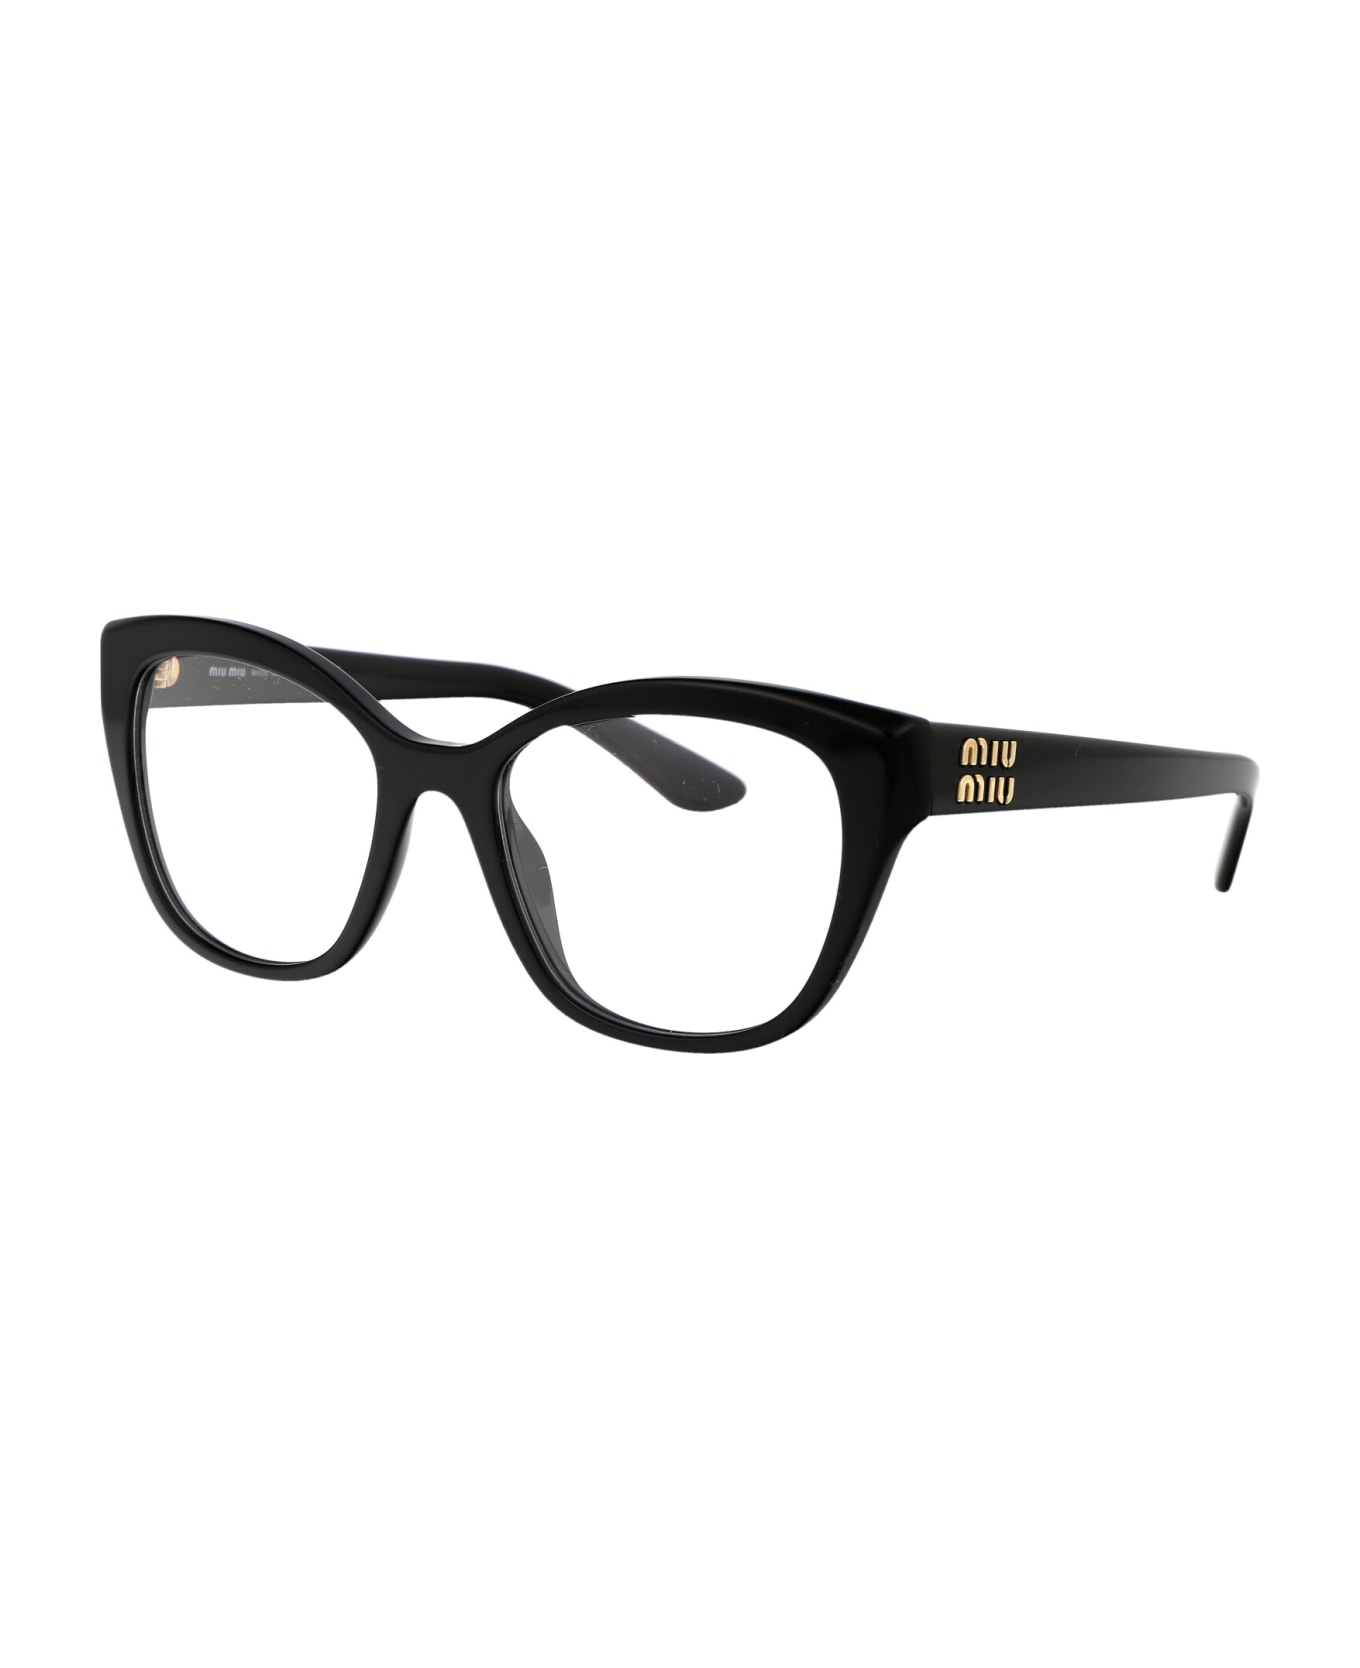 Miu Miu Eyewear 0mu 05xv Glasses - 1AB1O1 BLACK